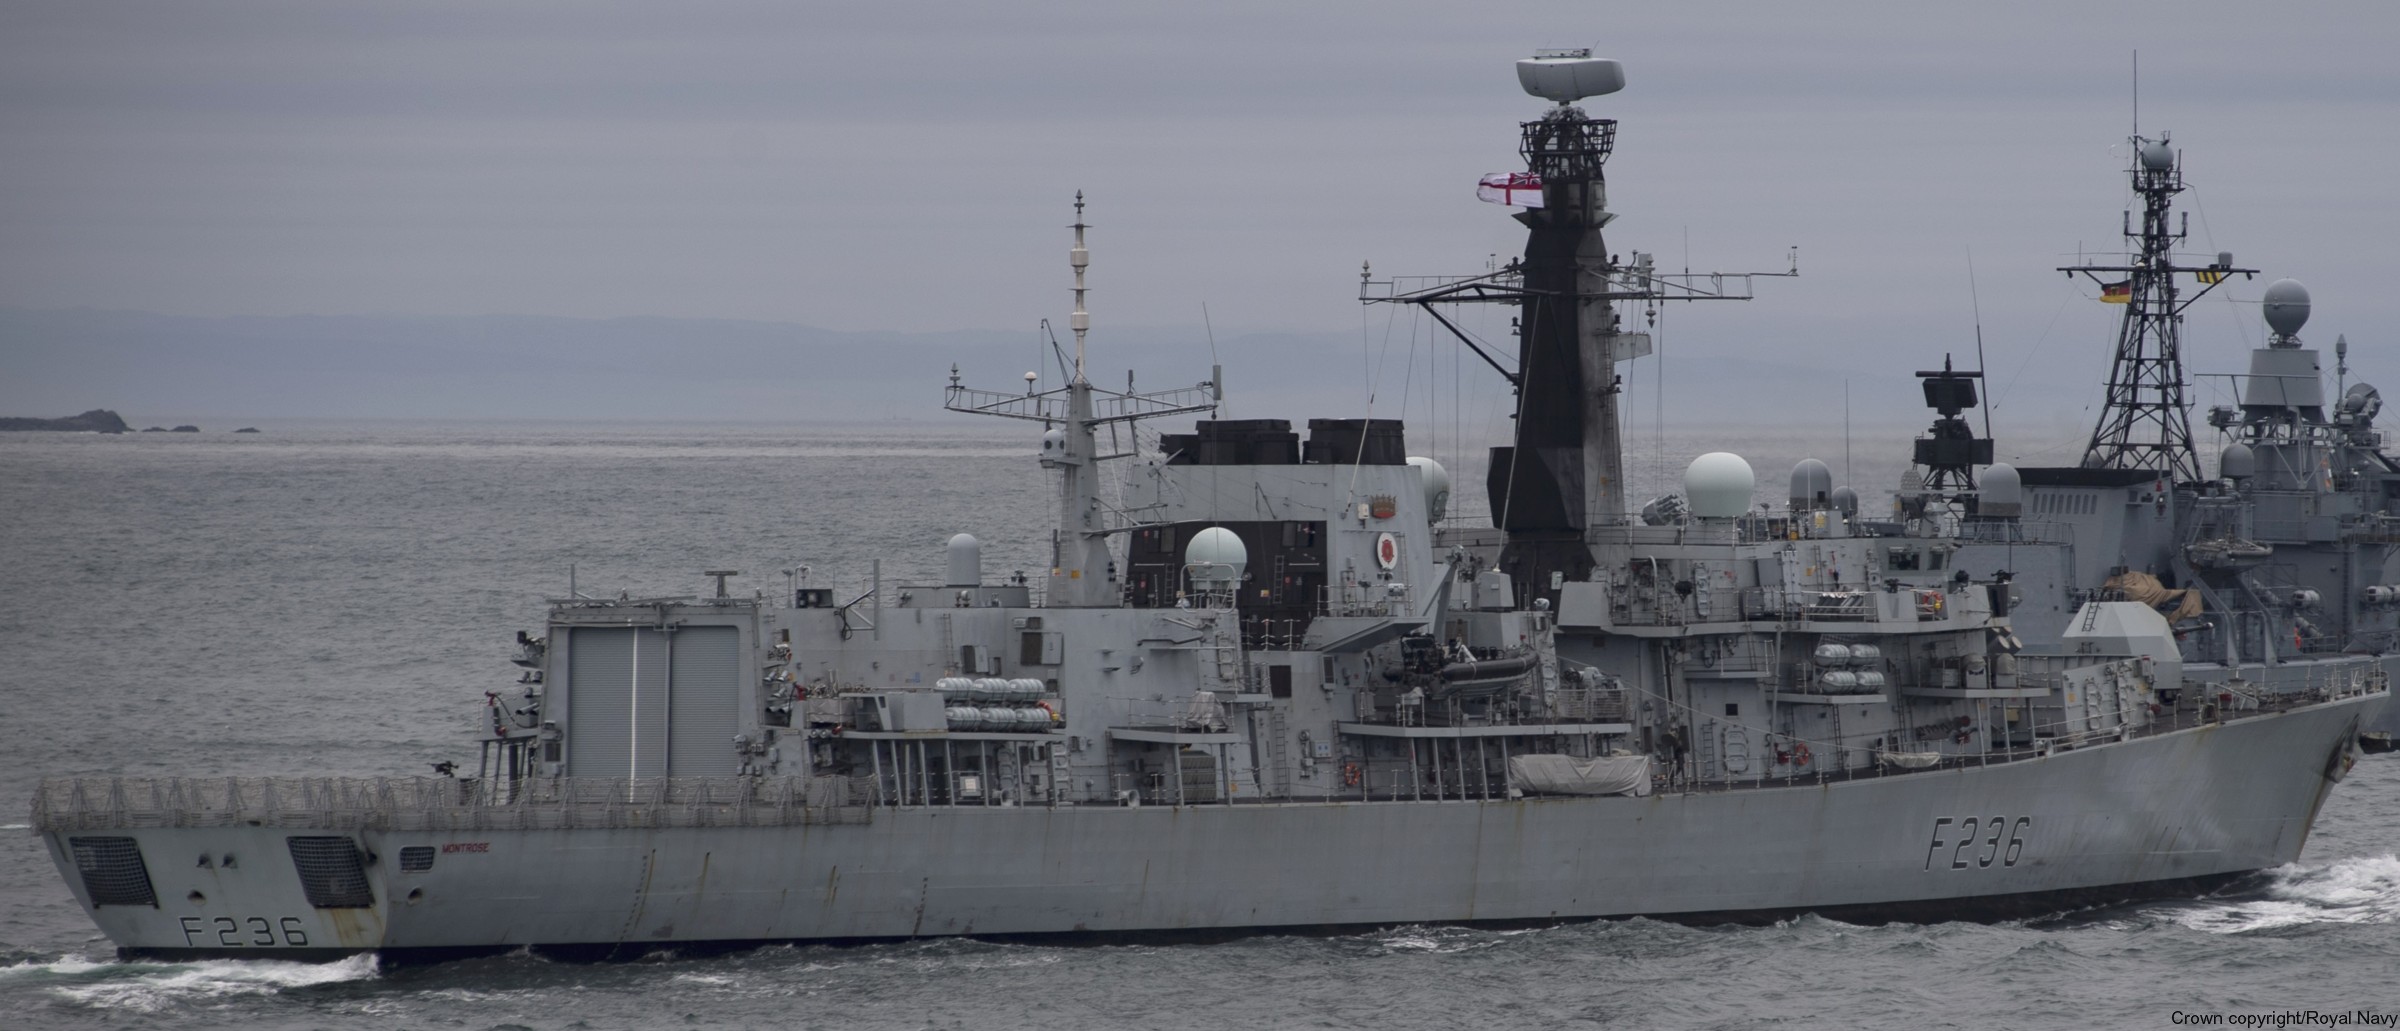 f-236 hms montrose type 23 duke class guided missile frigate ffg royal navy 44